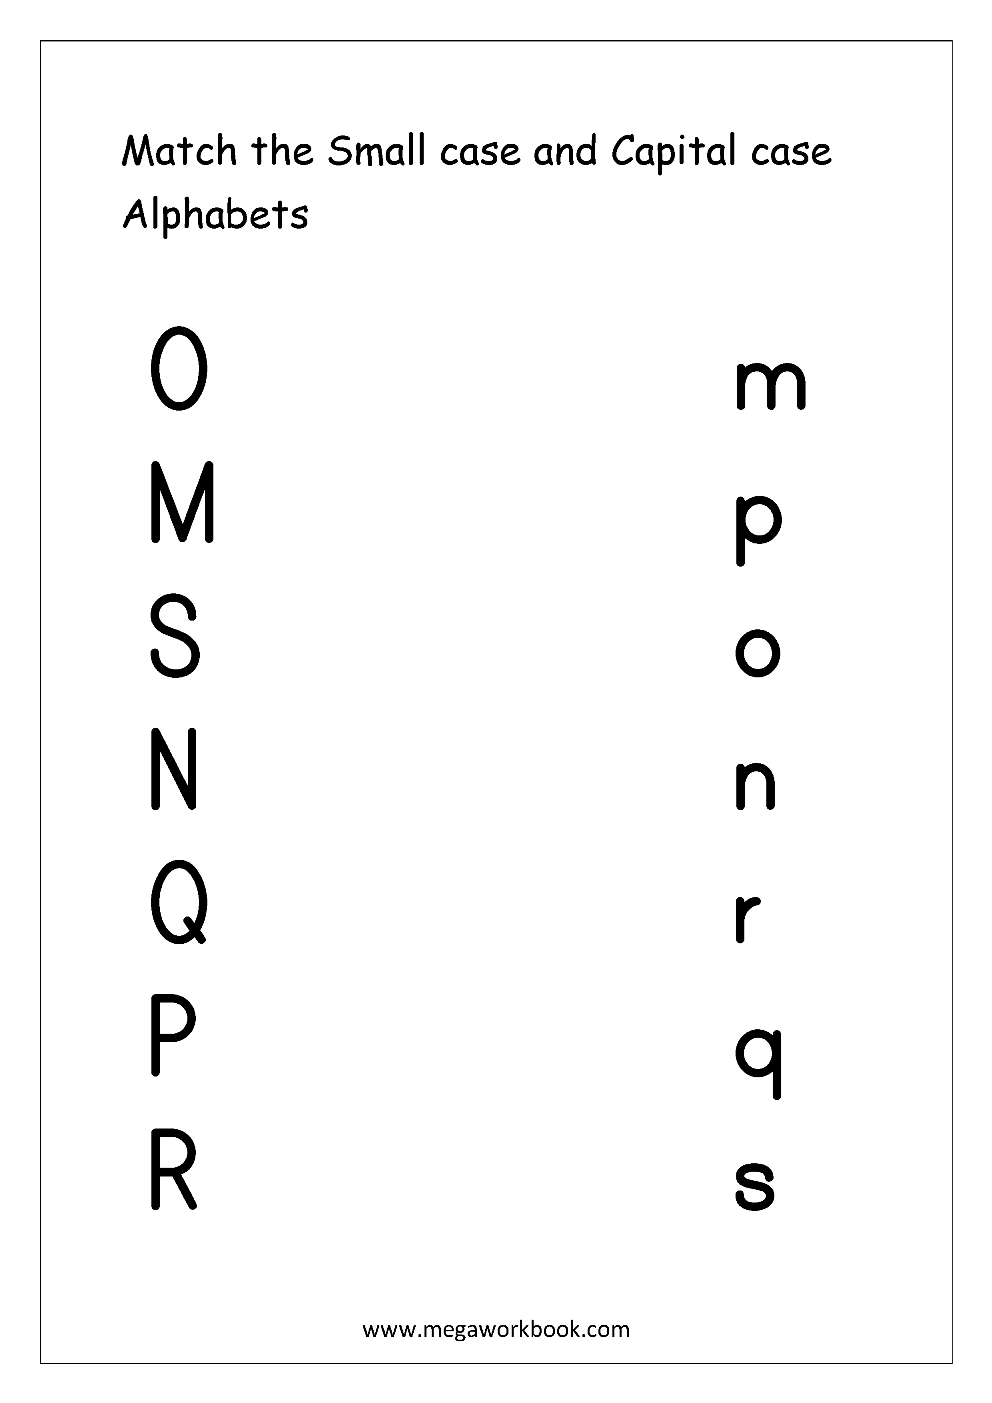 Free English Worksheets - Alphabet Matching - Megaworkbook inside Alphabet Matching Worksheets Pdf